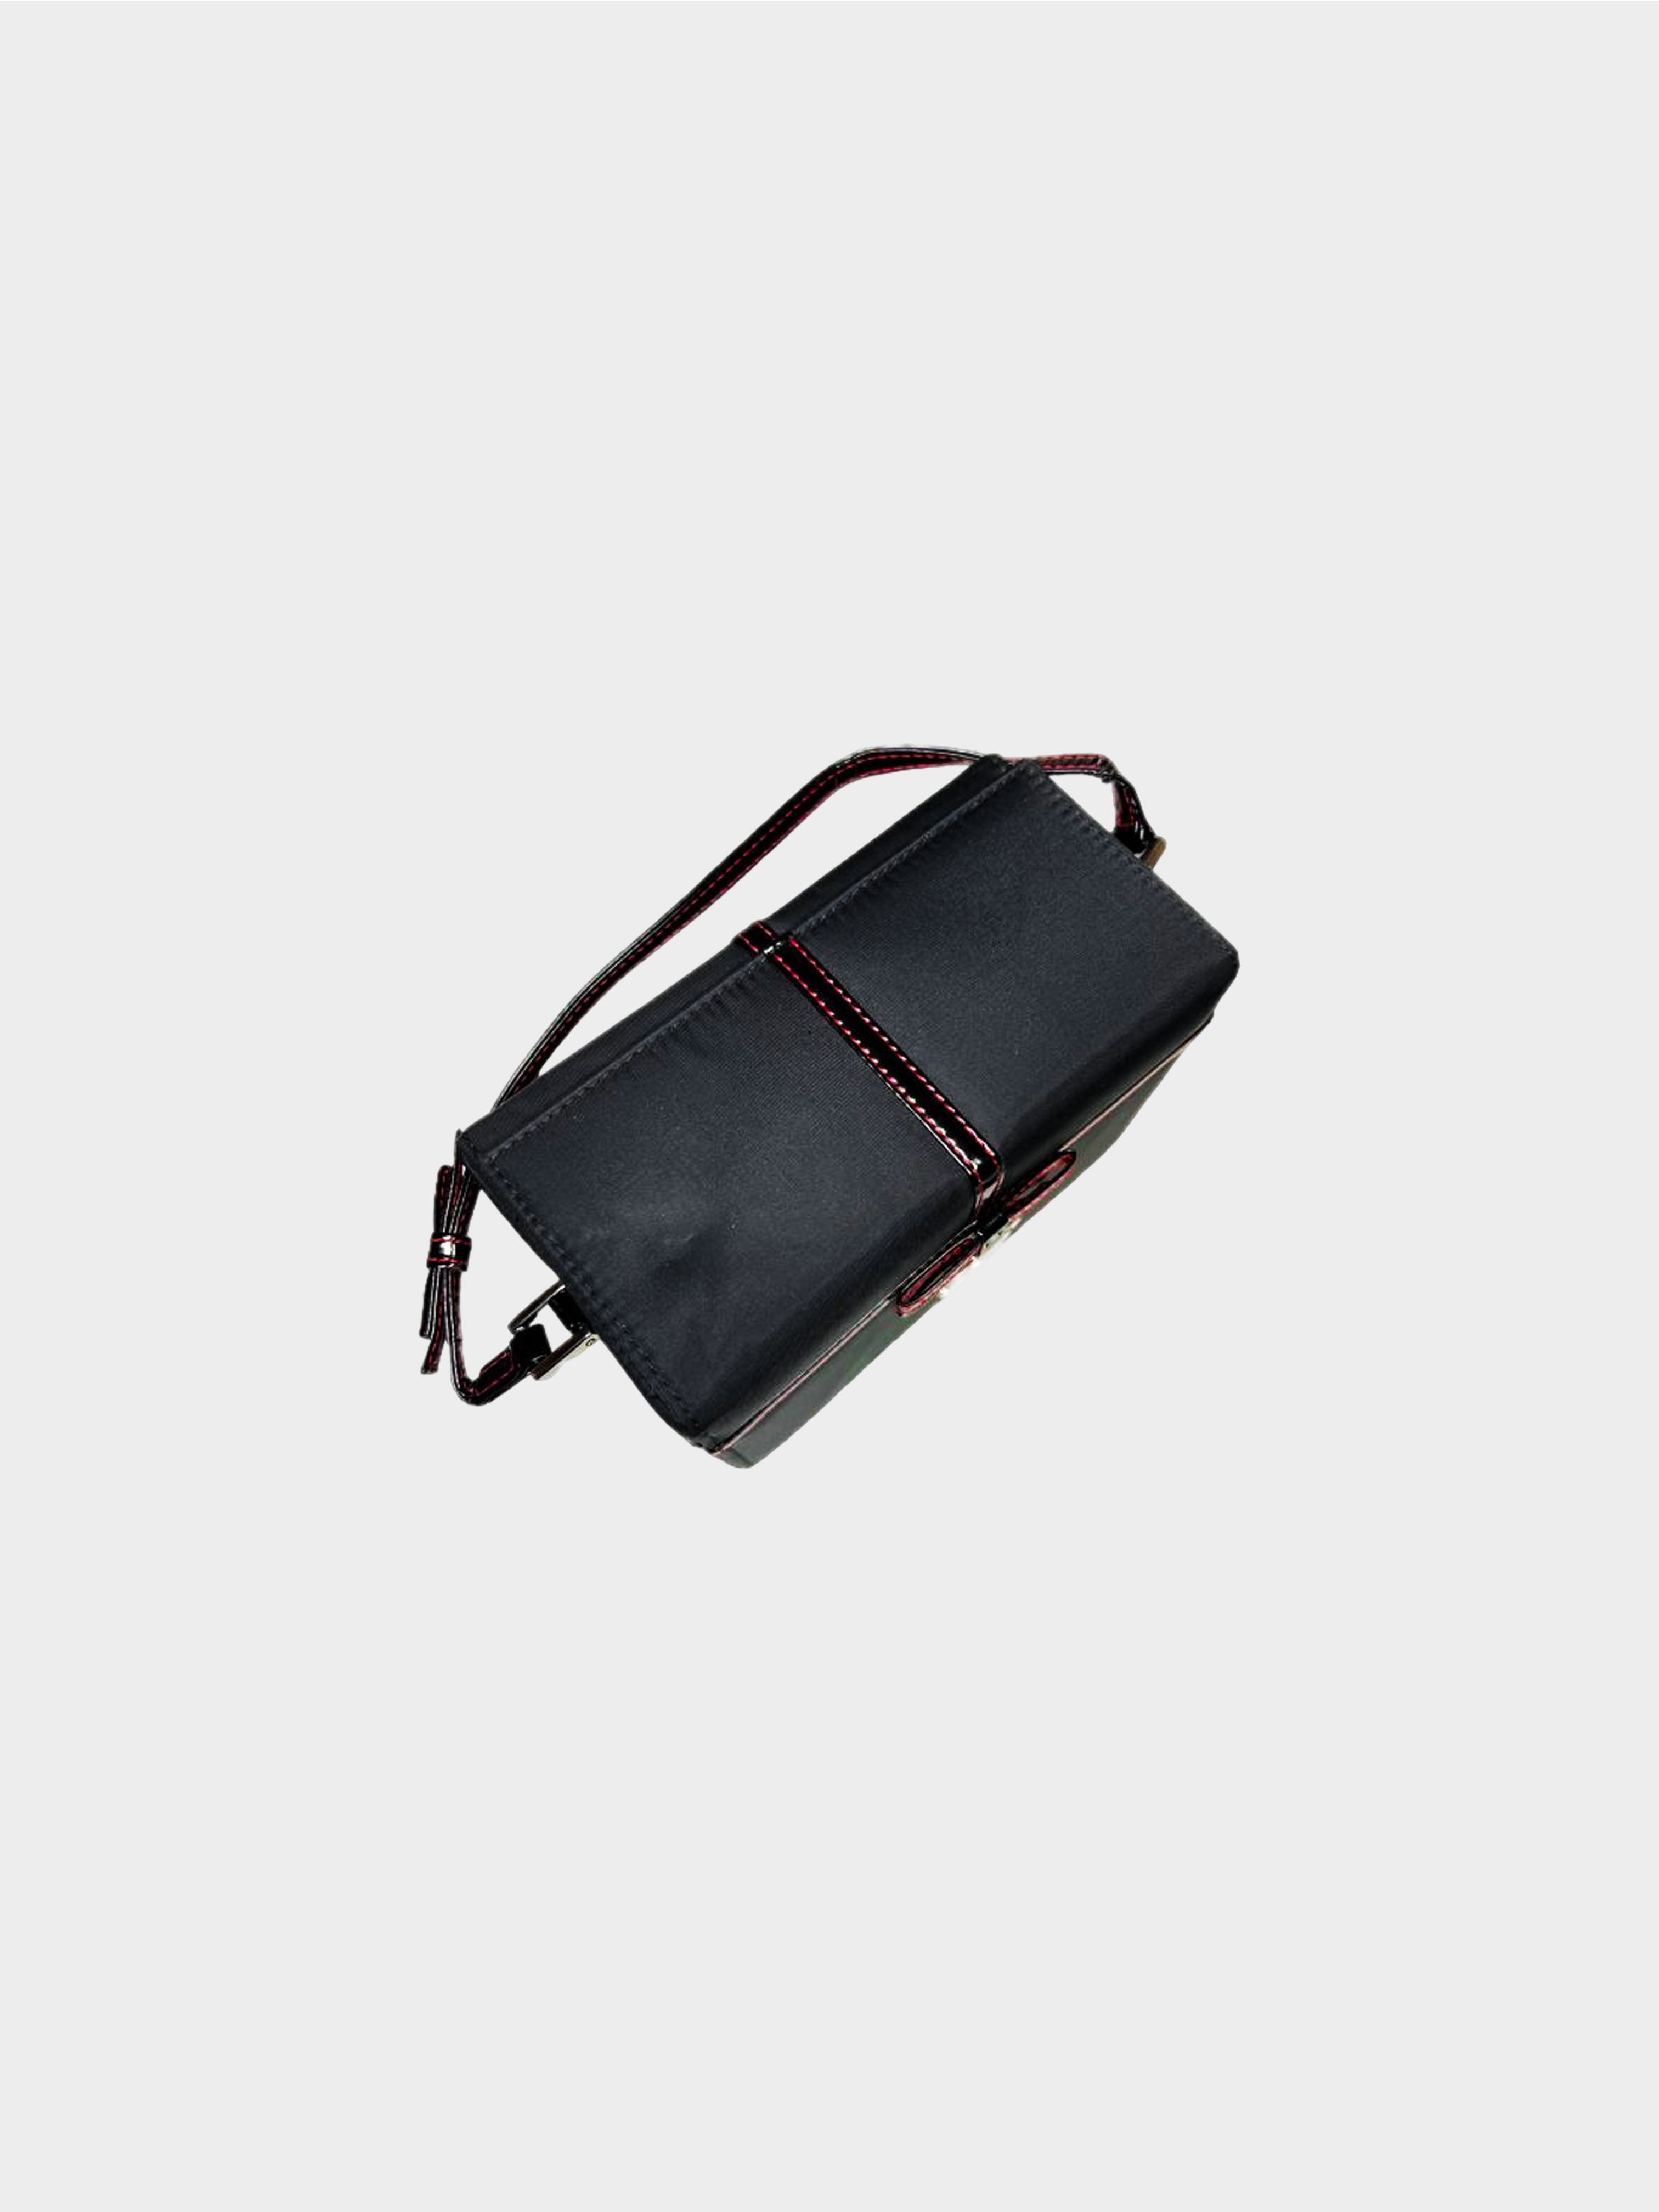 Christian Dior 2006 Black Ribbon Box Vanity Bag